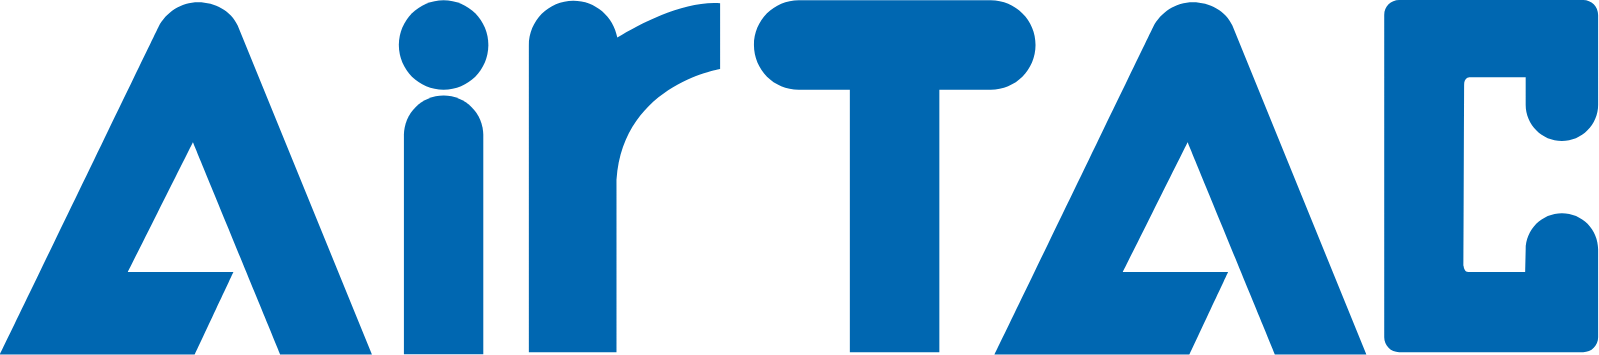 AirTAC International logo large (transparent PNG)